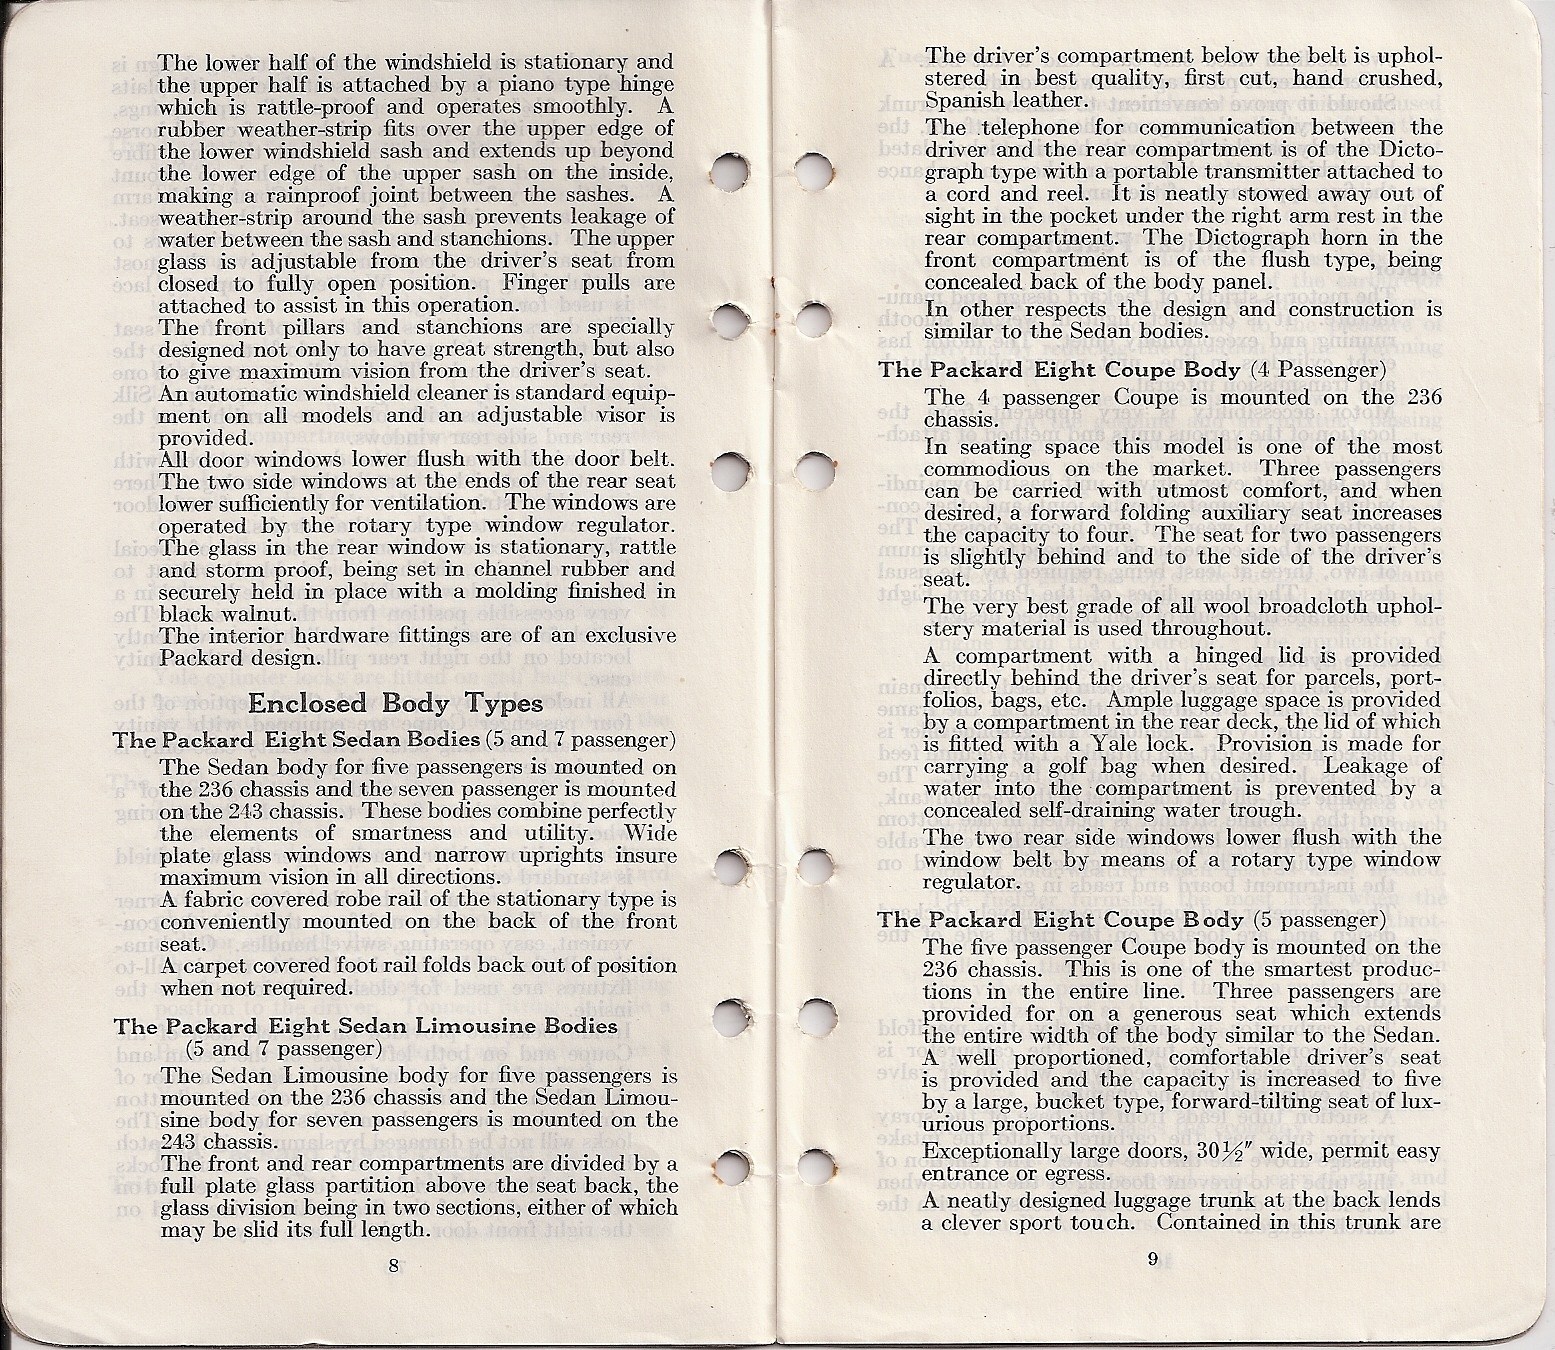 n_1925 Packard Eight Facts Book-08-09.jpg